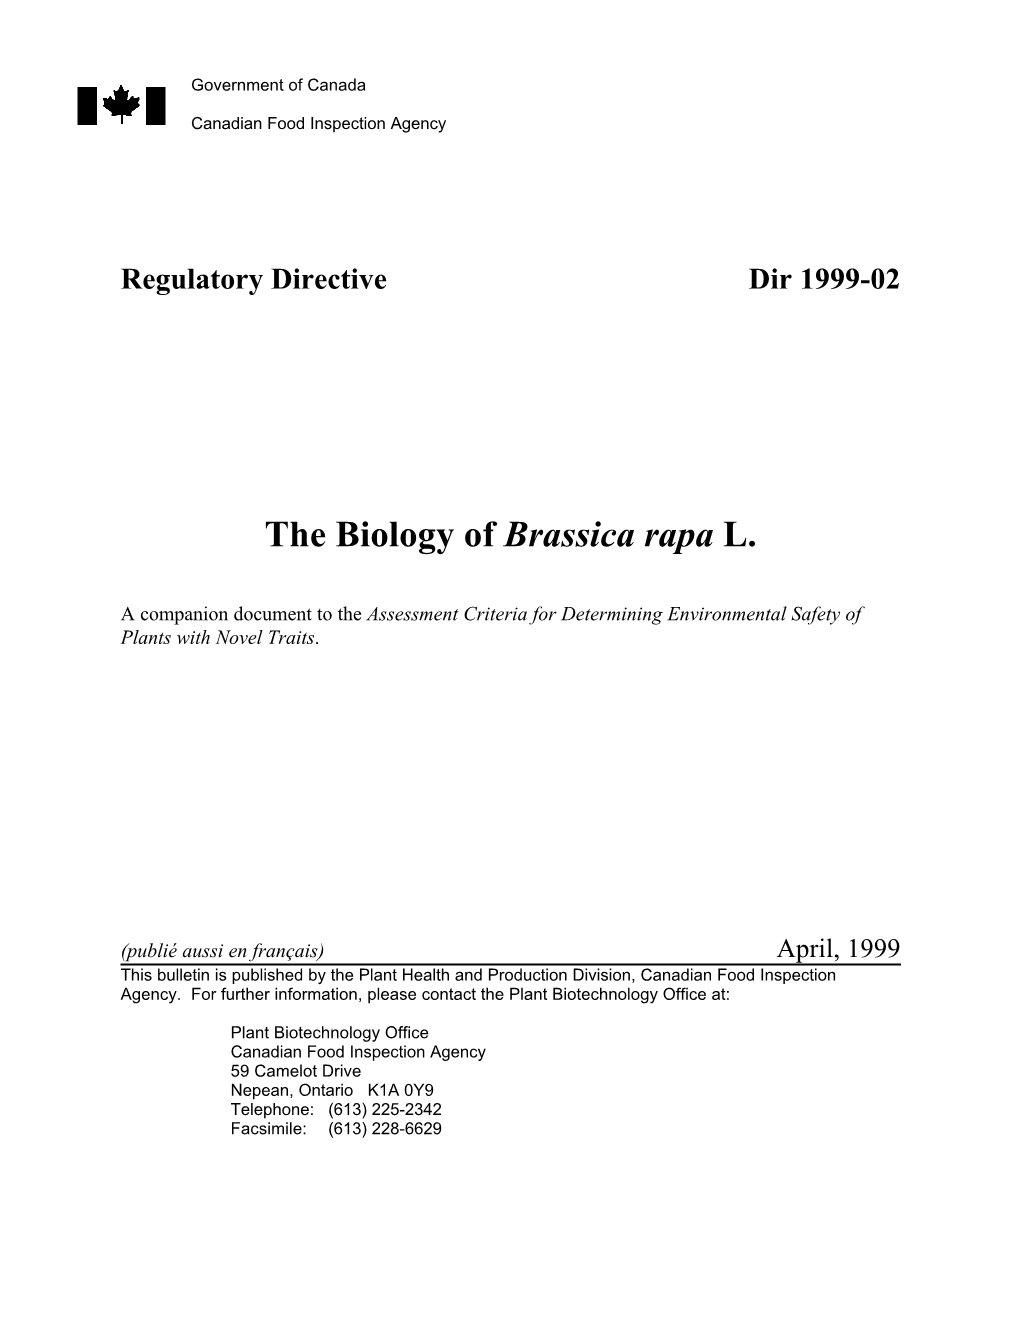 The Biology of Brassica Rapa L